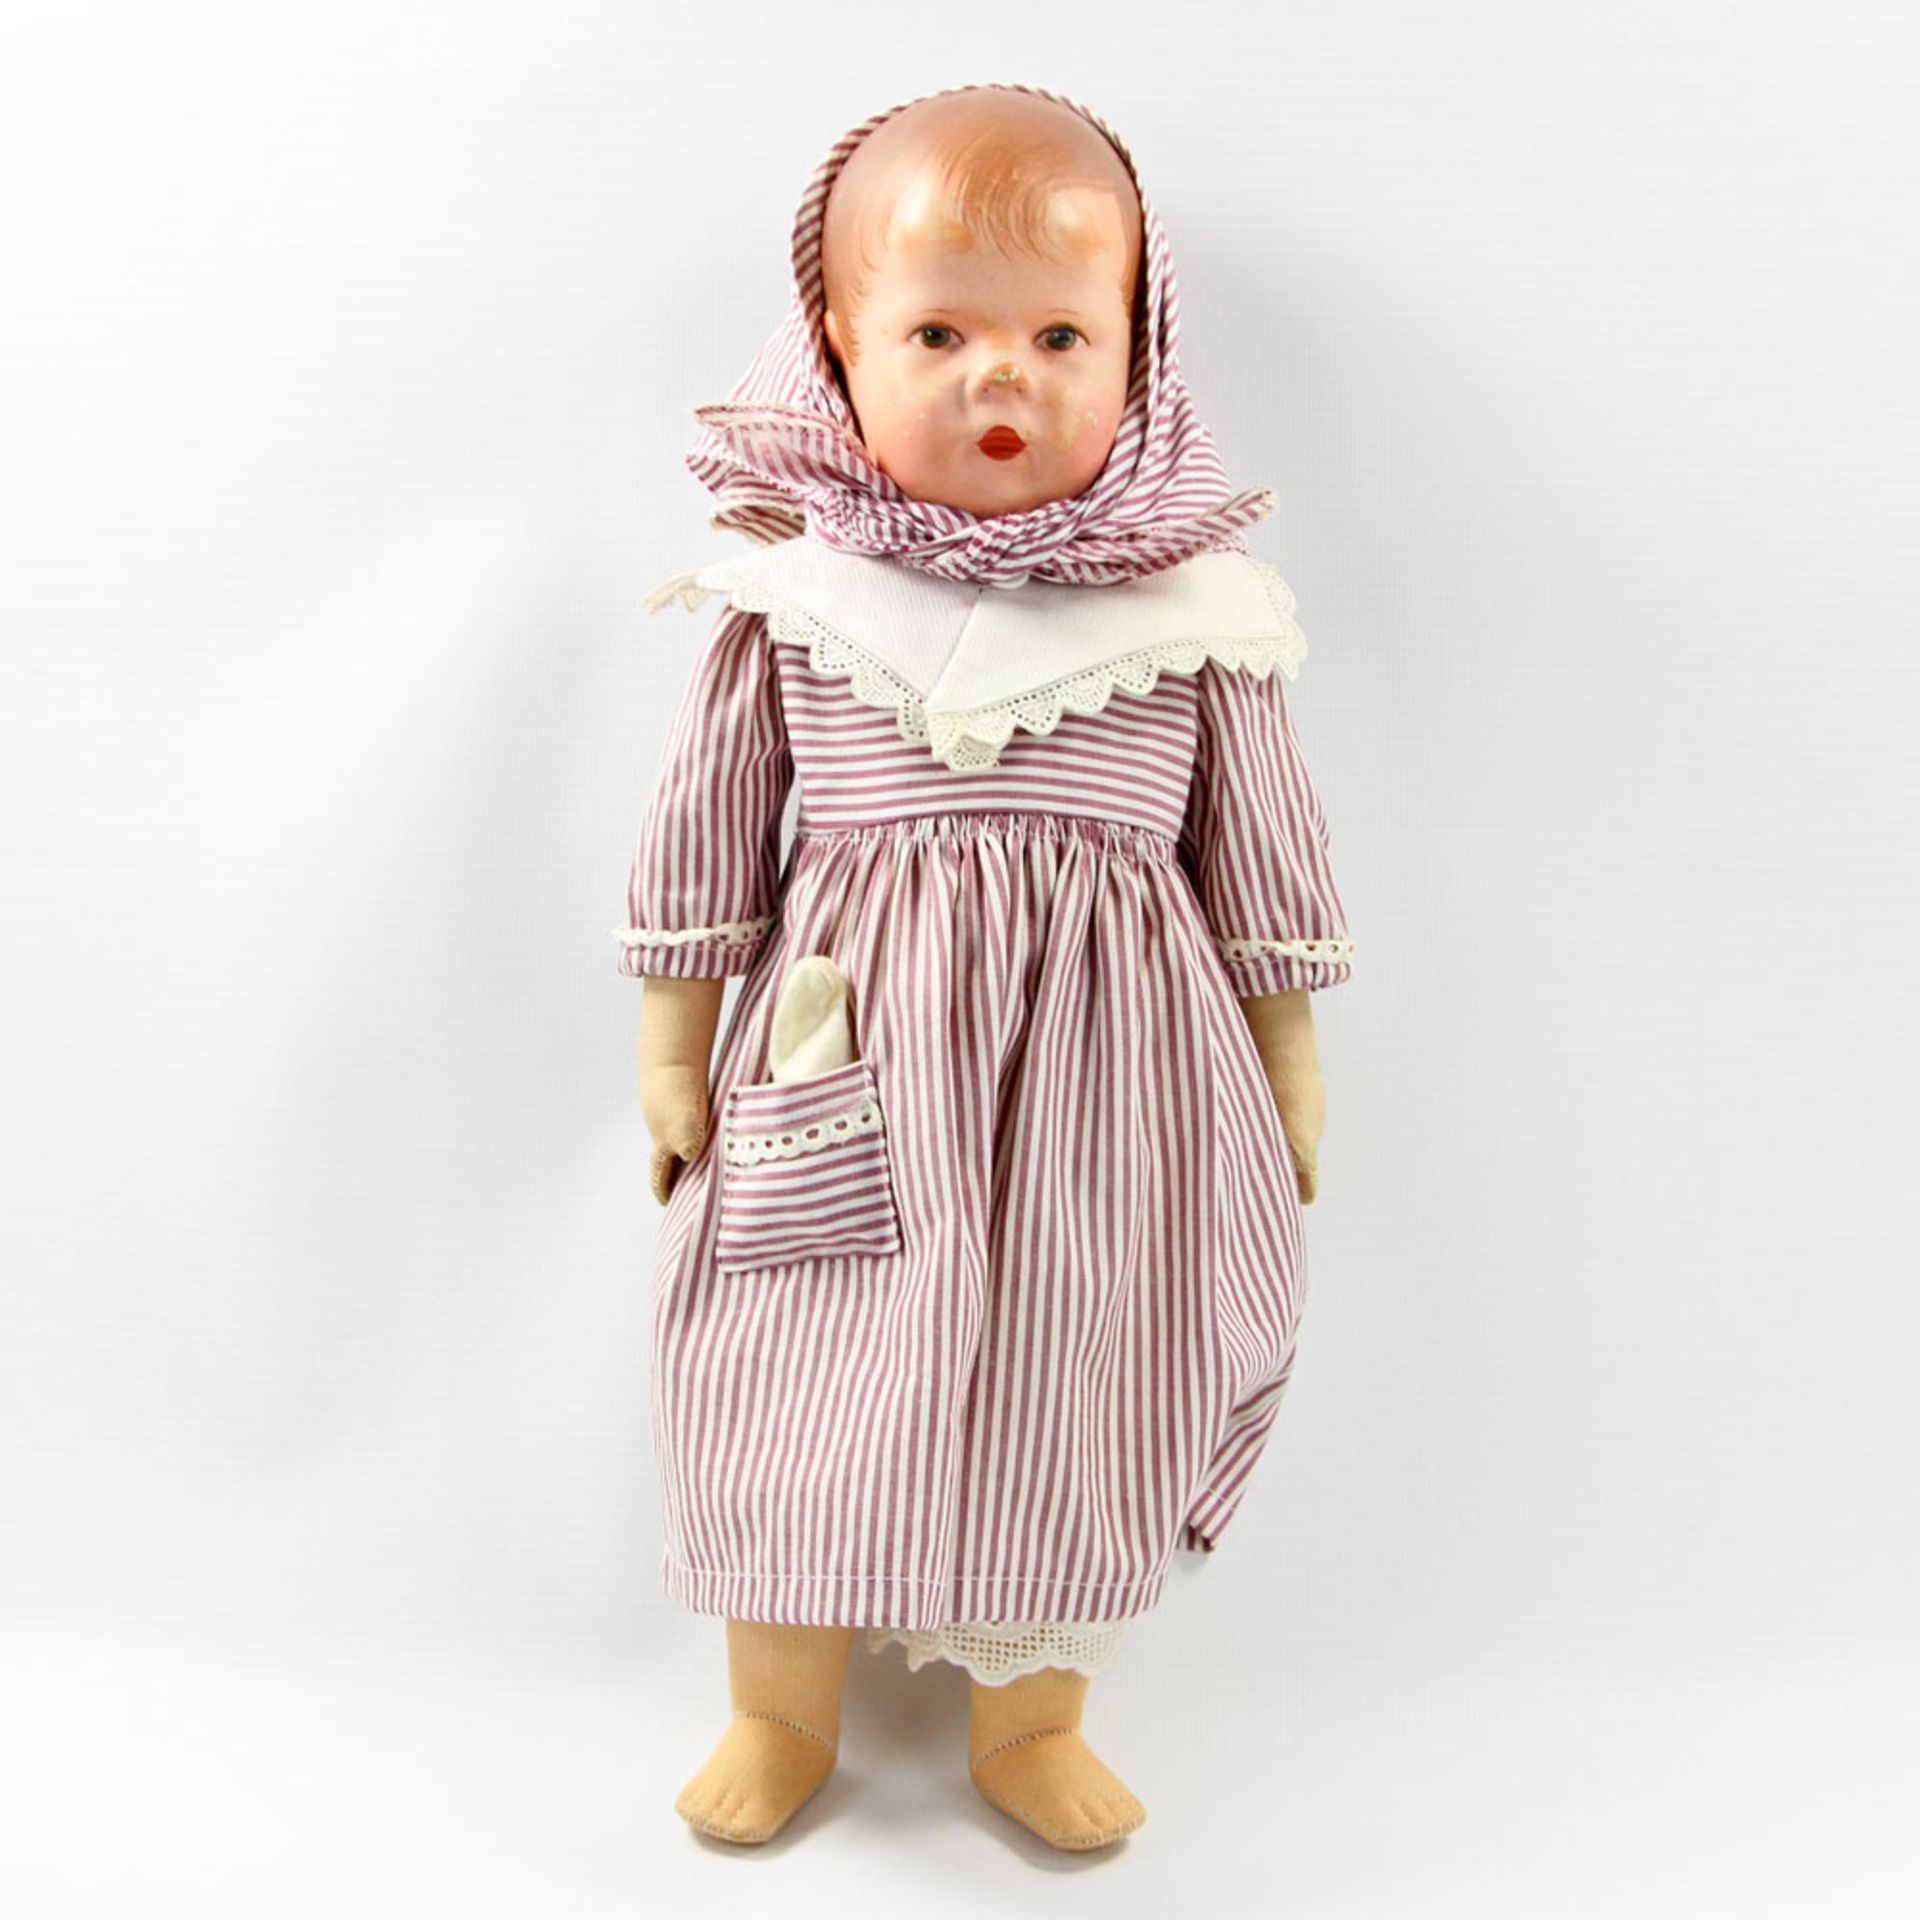 Frühe KÄTHE KRUSE- Puppe I, 1930er Jahre, fest angenähter Kopf mit drei Hinterkopfnähten und braun-